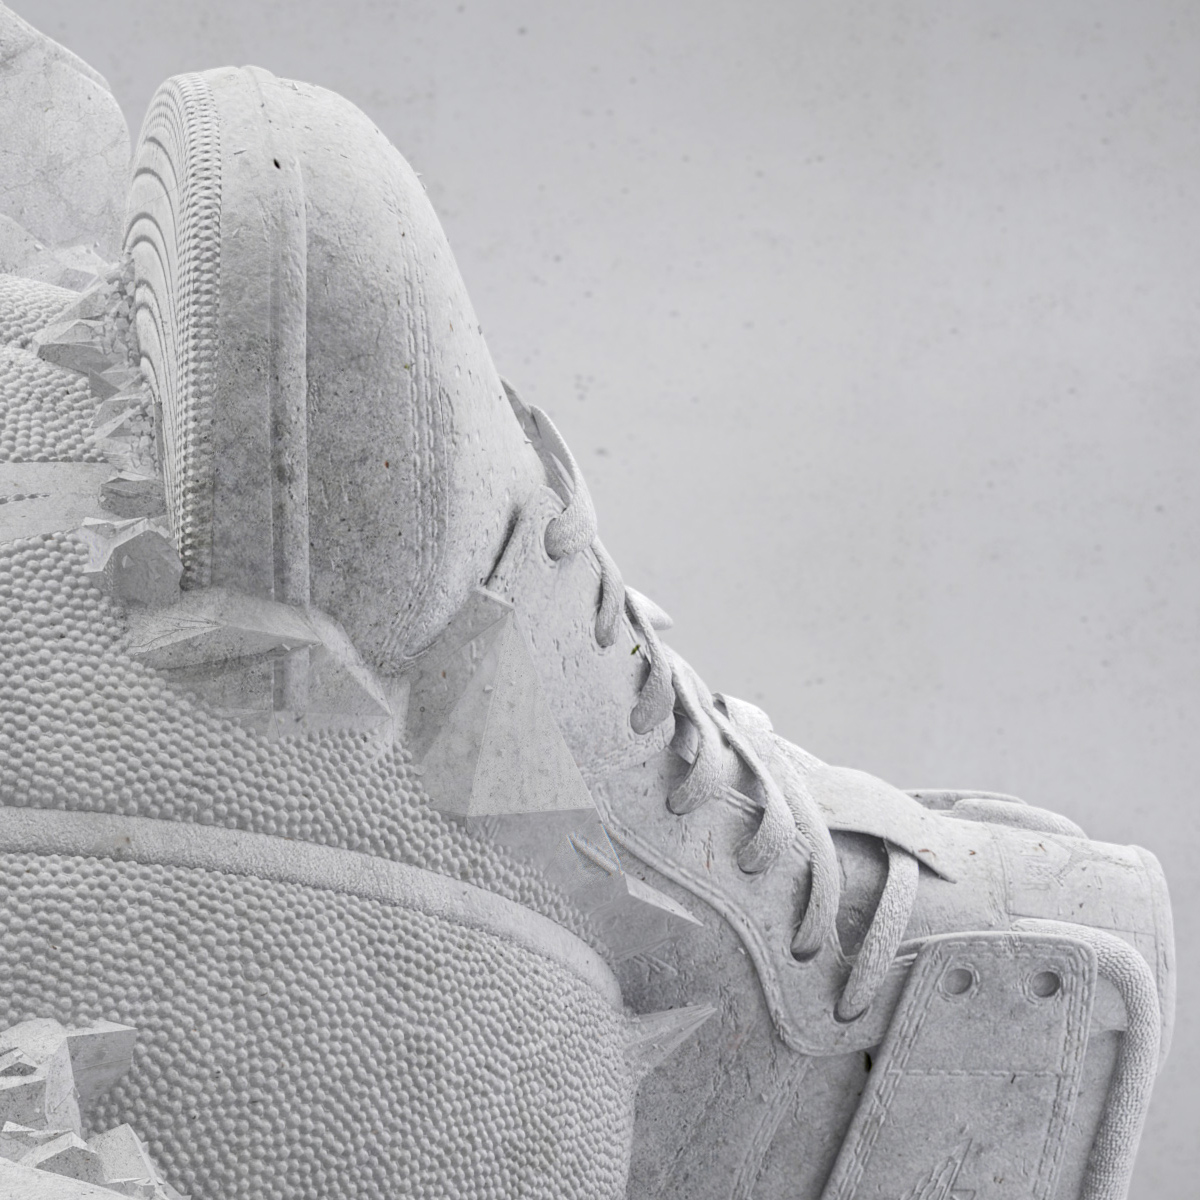 Nike sculpture concrete 3D basketball sneakerball installation shoes sneakers nikeair jordan air force blazer pop culture